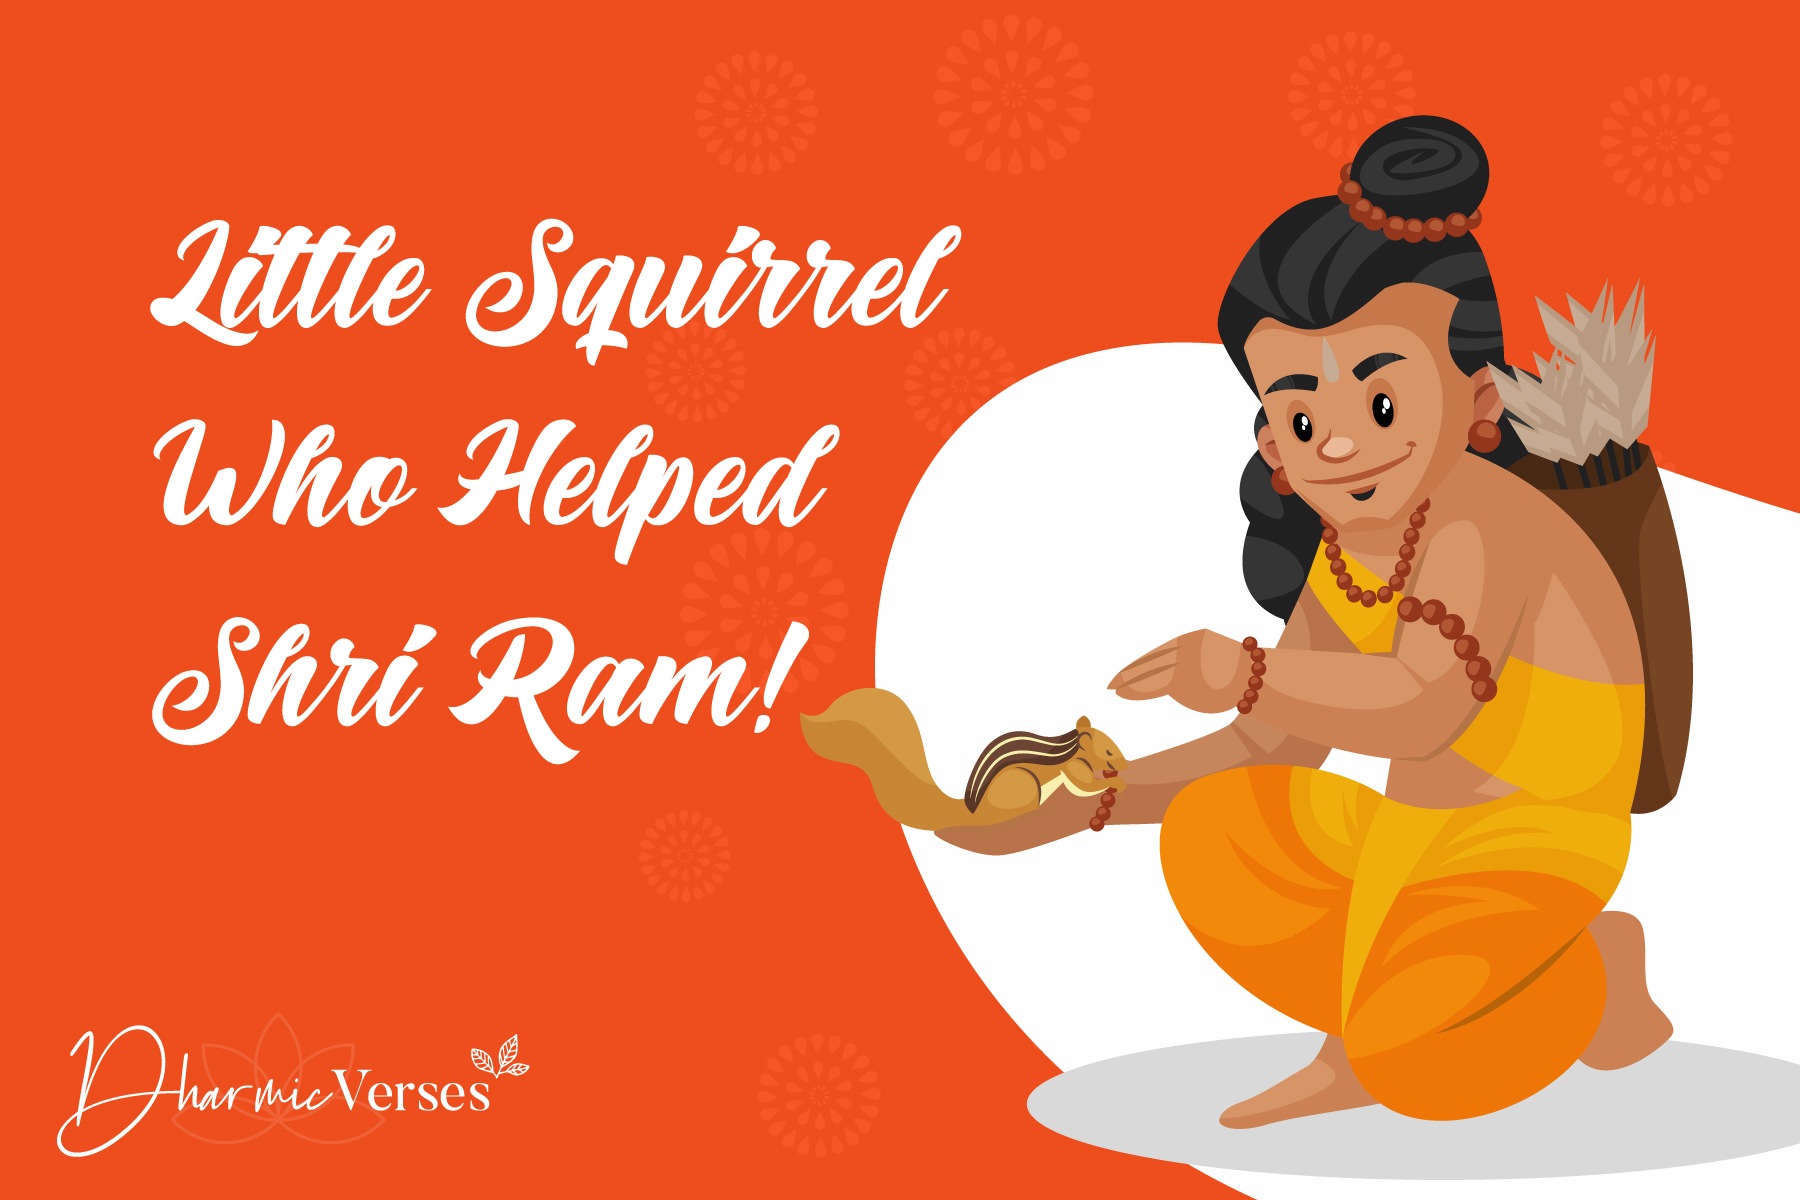 Little squirrel who helped Shri Ram!